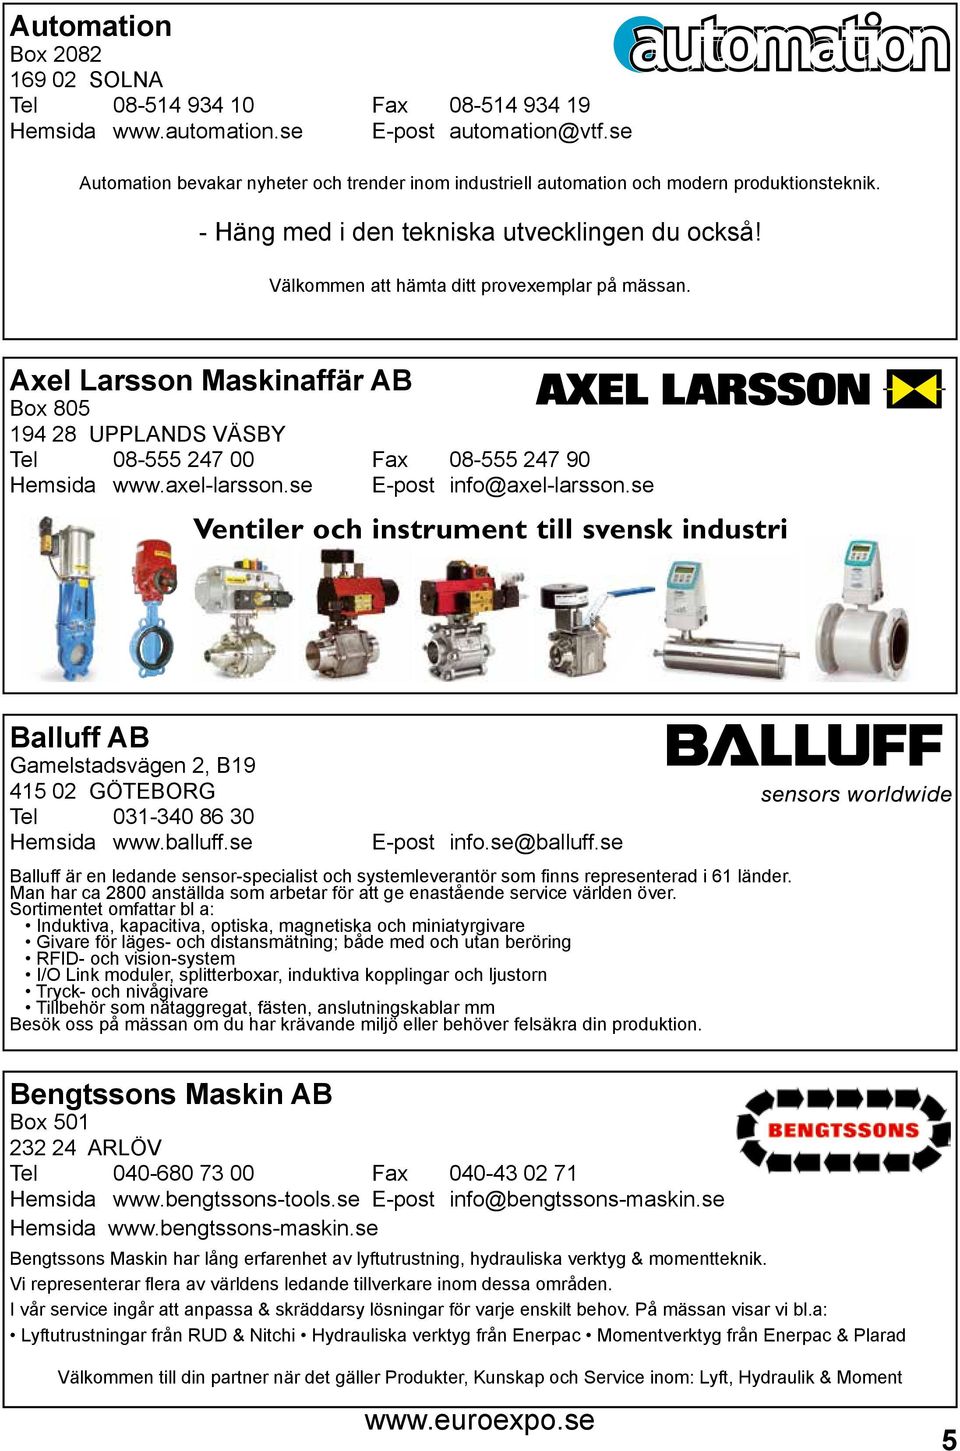 Axel Larsson Maskinaffär AB Box 805 194 28 UPPLANDS VÄSBY Tel 08-555 247 00 Fax 08-555 247 90 Hemsida www.axel-larsson.se E-post info@axel-larsson.